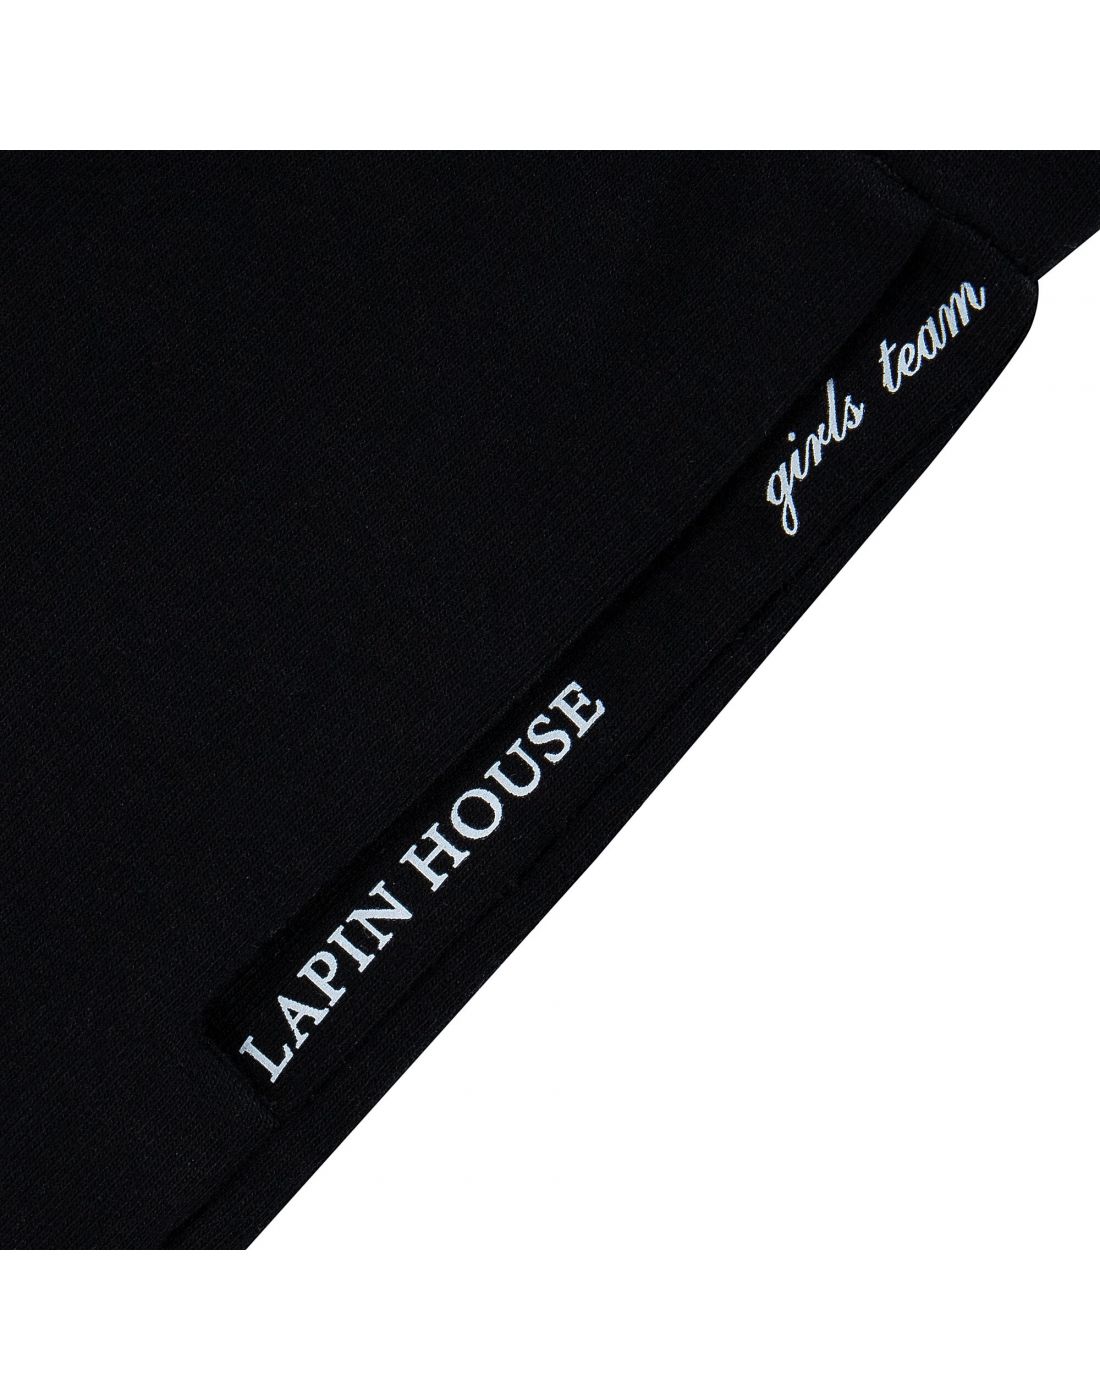 Lapin House Girlss Jacket & Trouser Set